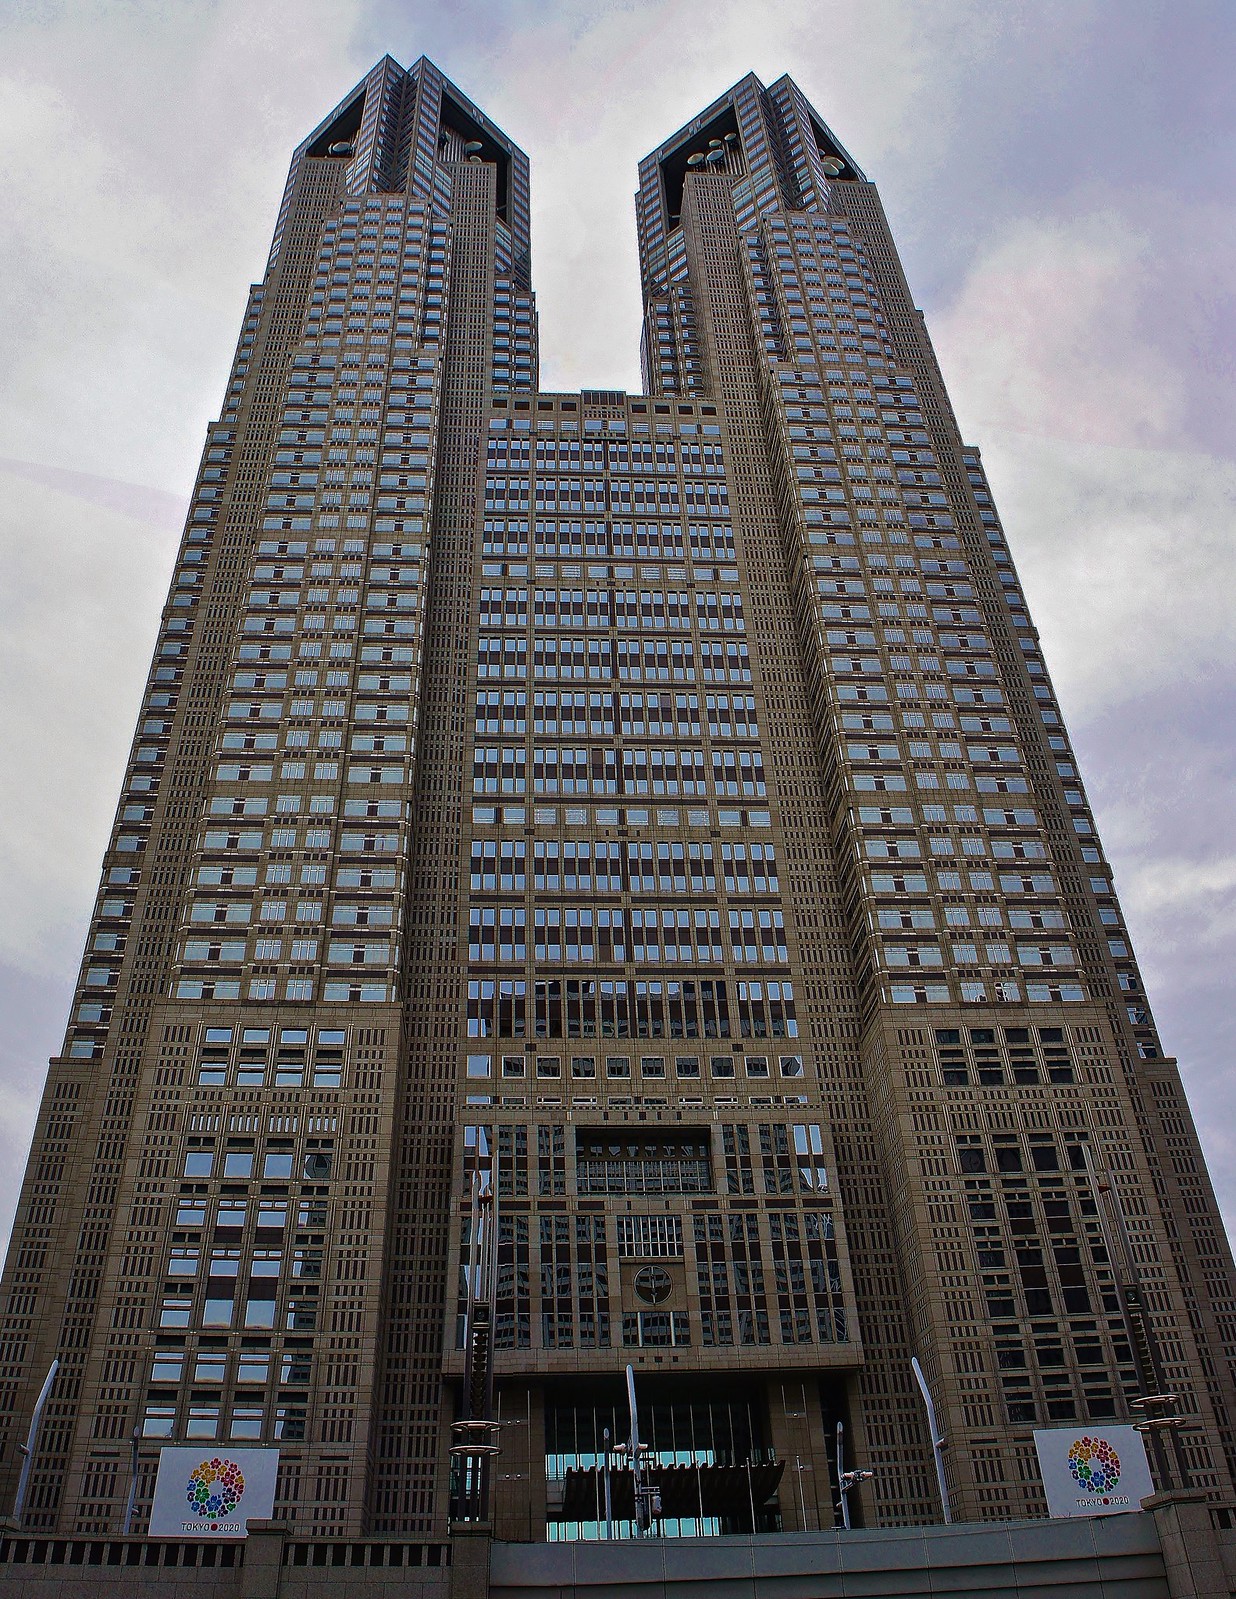 Tokyo Metropolitan Government Building at Shinjuku